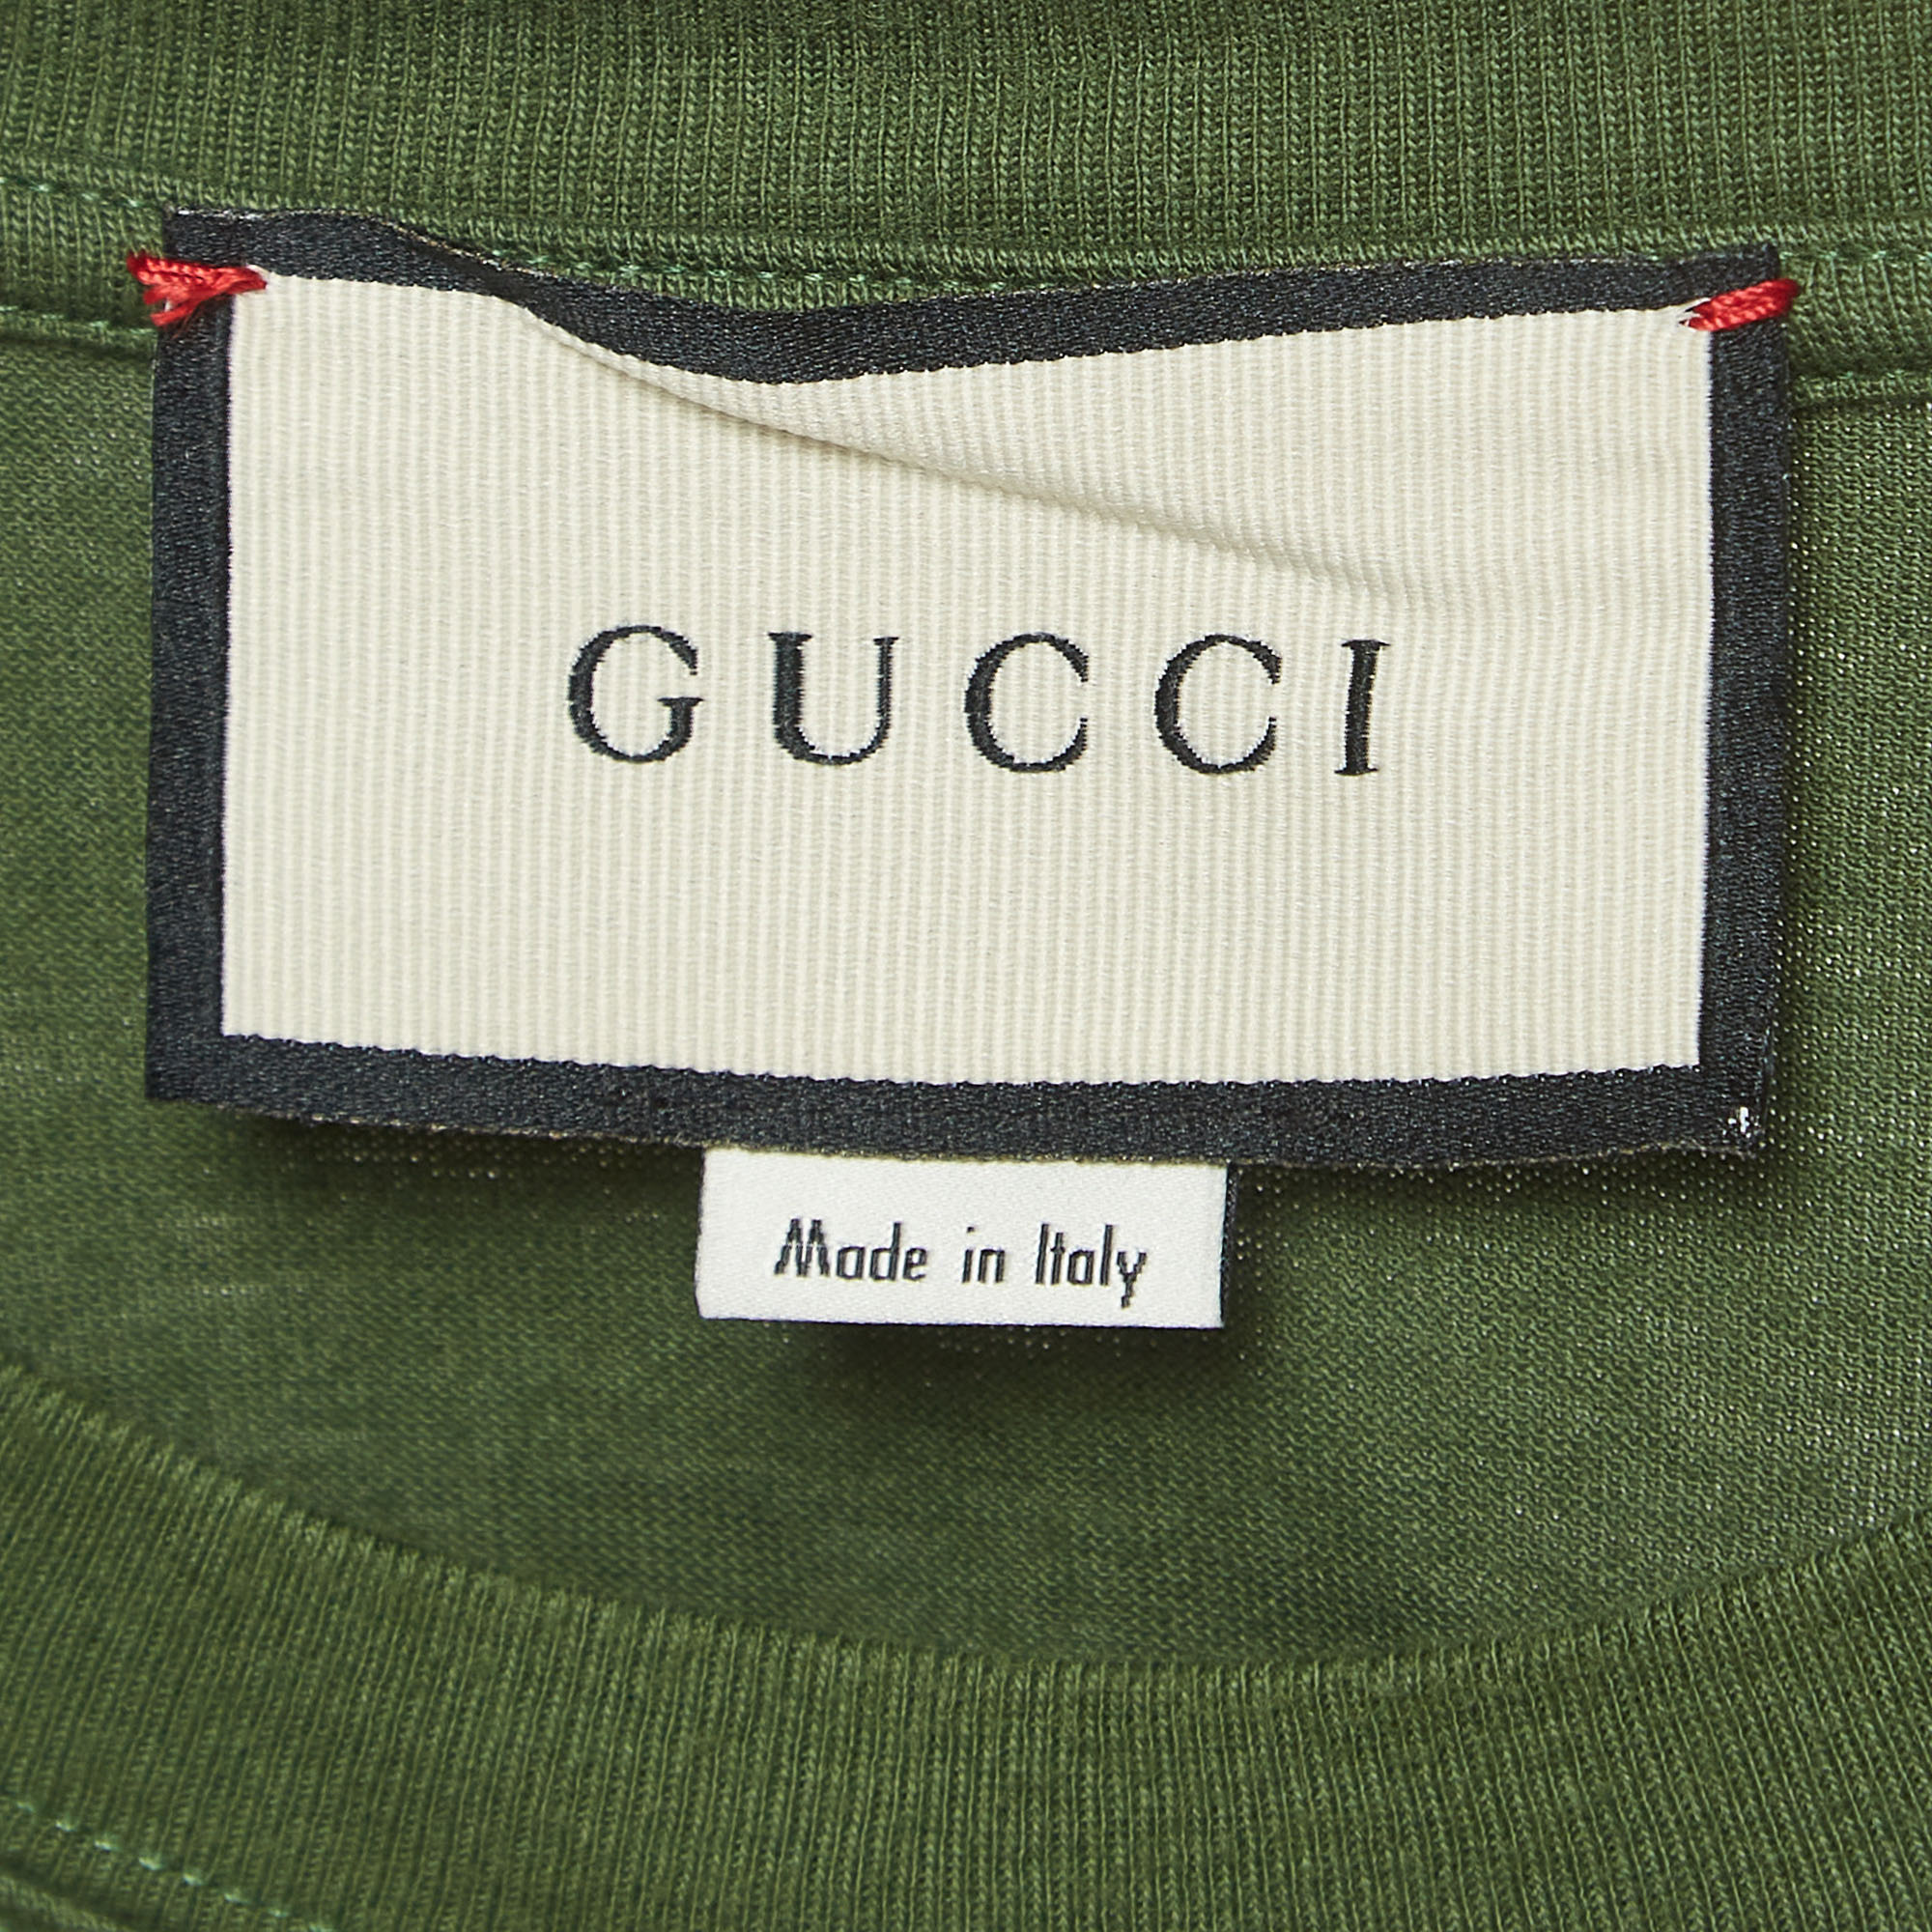 Gucci Green Manifesto Mask Print Cotton Crew Neck T-Shirt XS